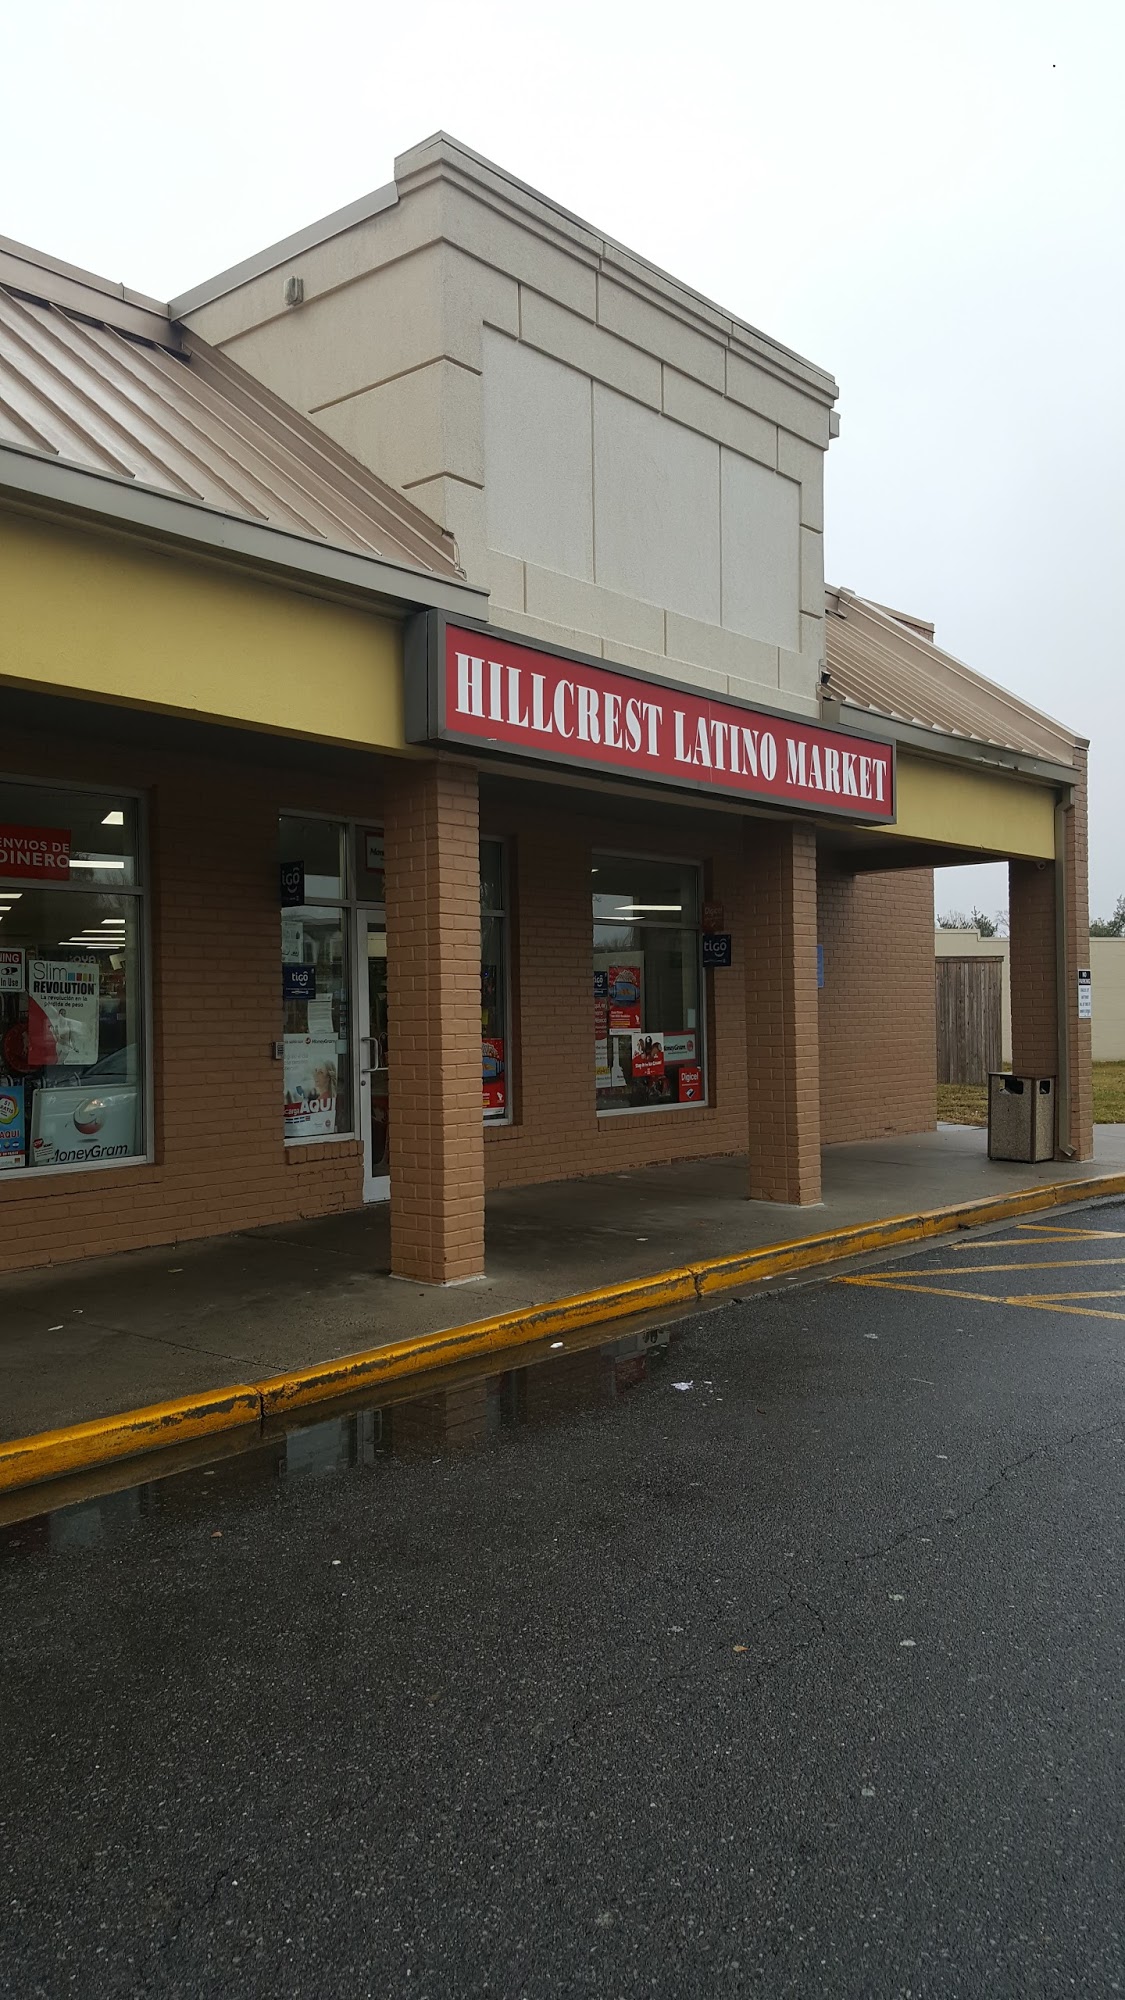 Hillcrest Latino Market